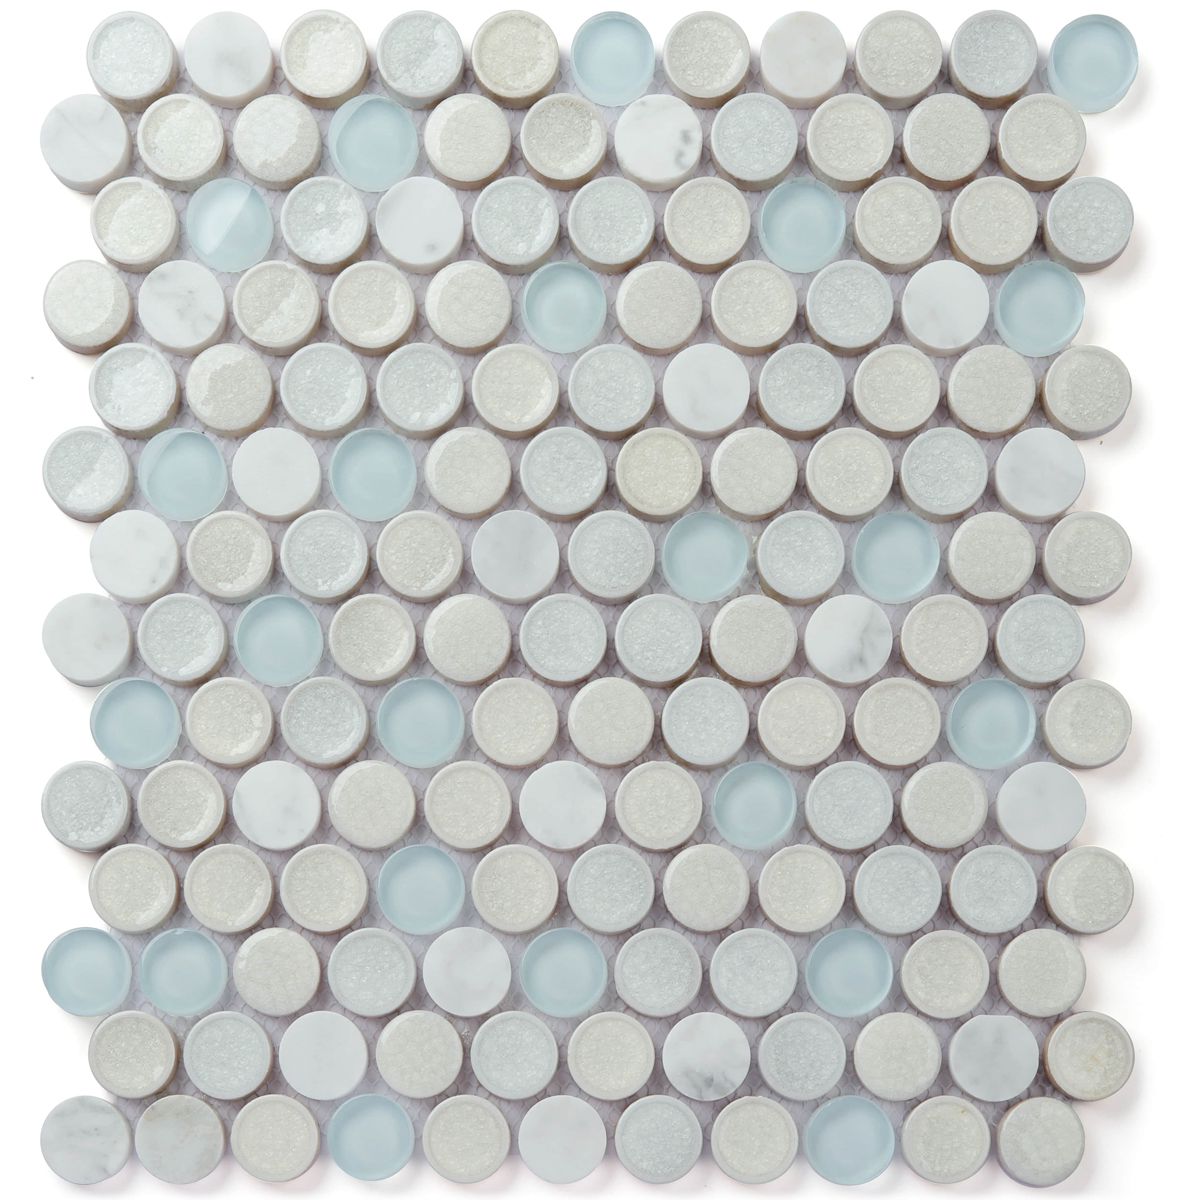 Glass ceramic mosaic backsplash wall tile